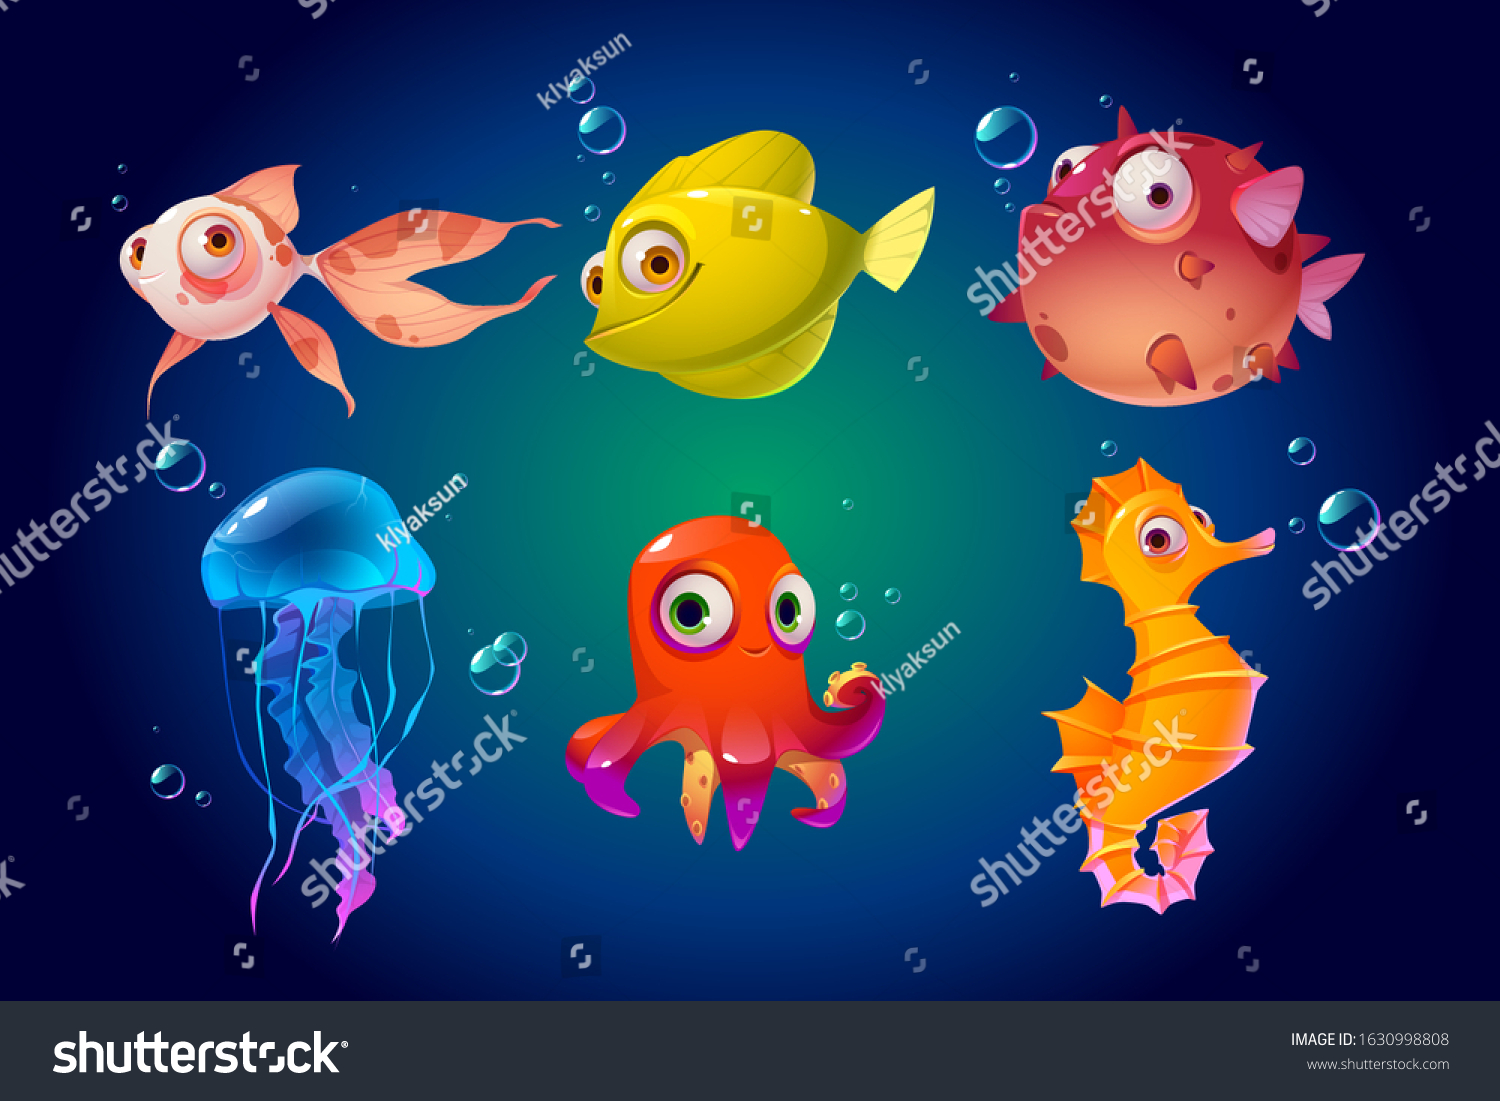 jellyfish-cartoon-images-stock-photos-vectors-shutterstock